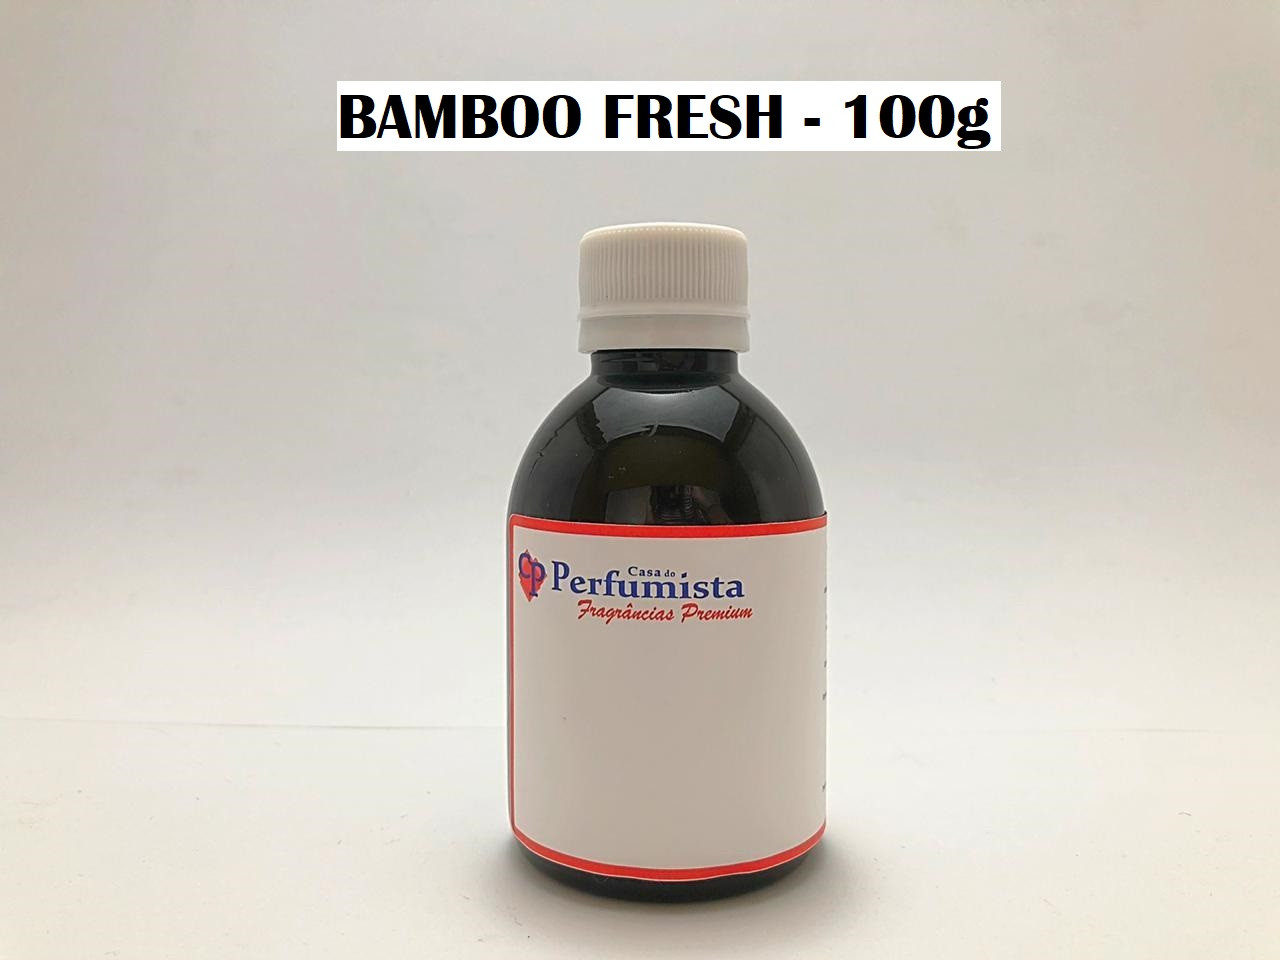 BAMBOO FRESH - 100g